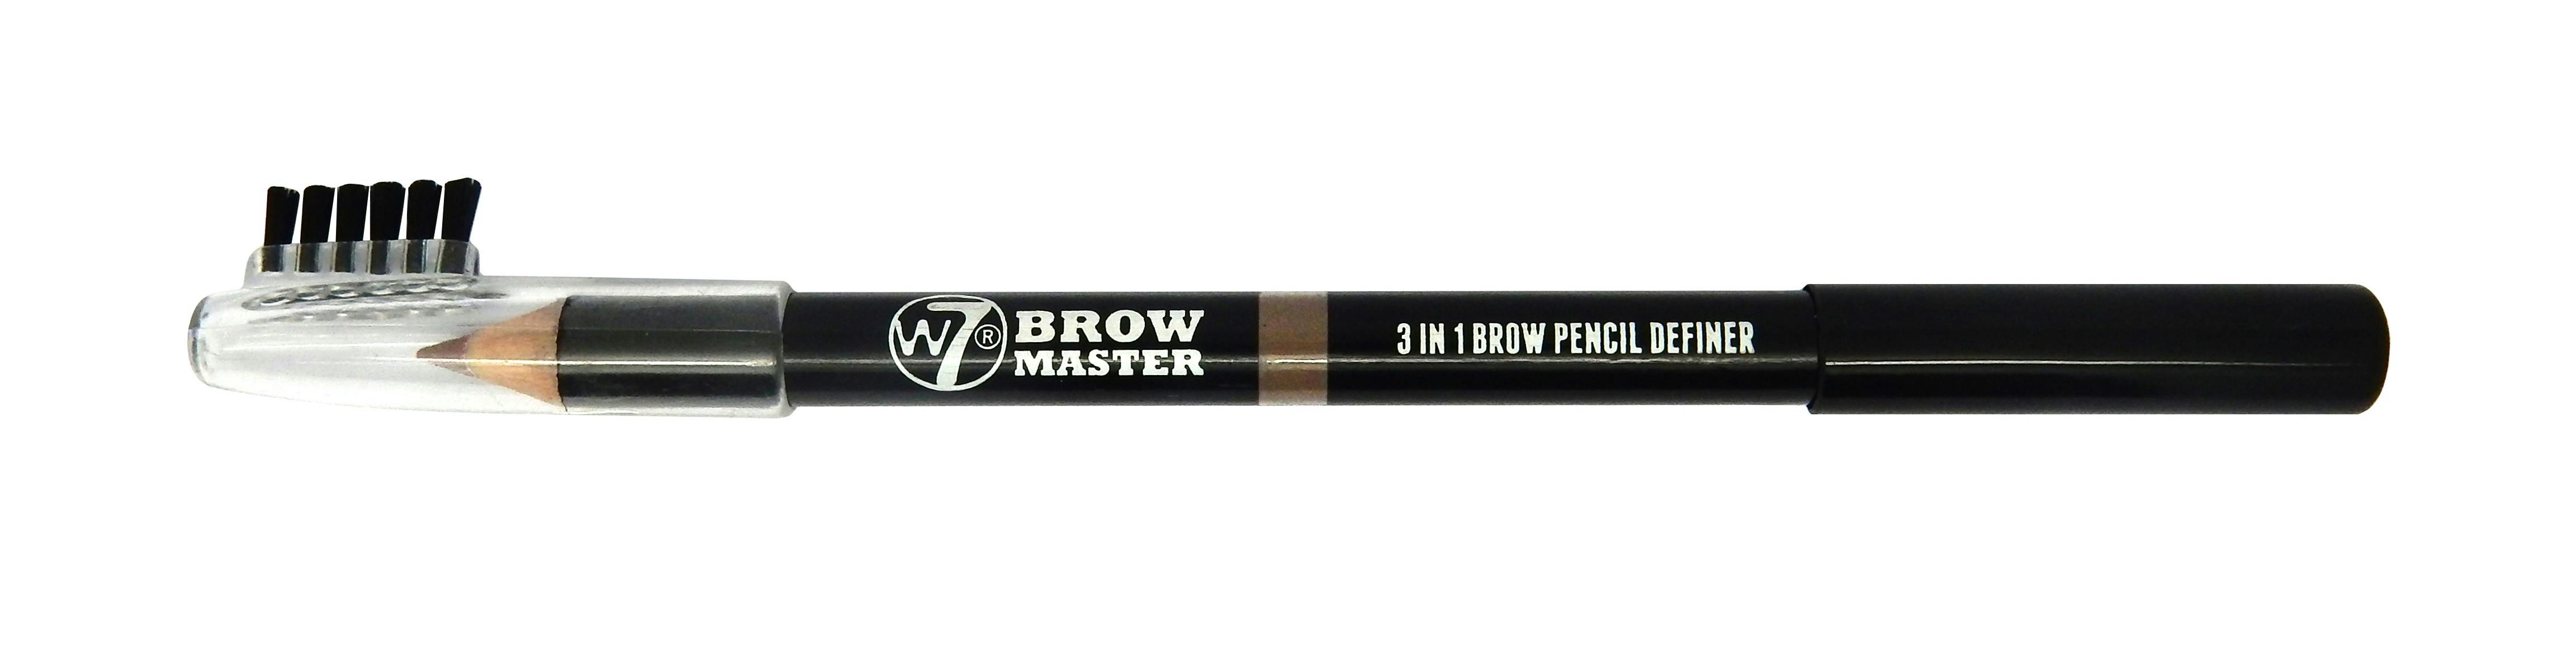 W7 Brow Master 3 In 1 Brow Pencil Definer Blonde 1 st